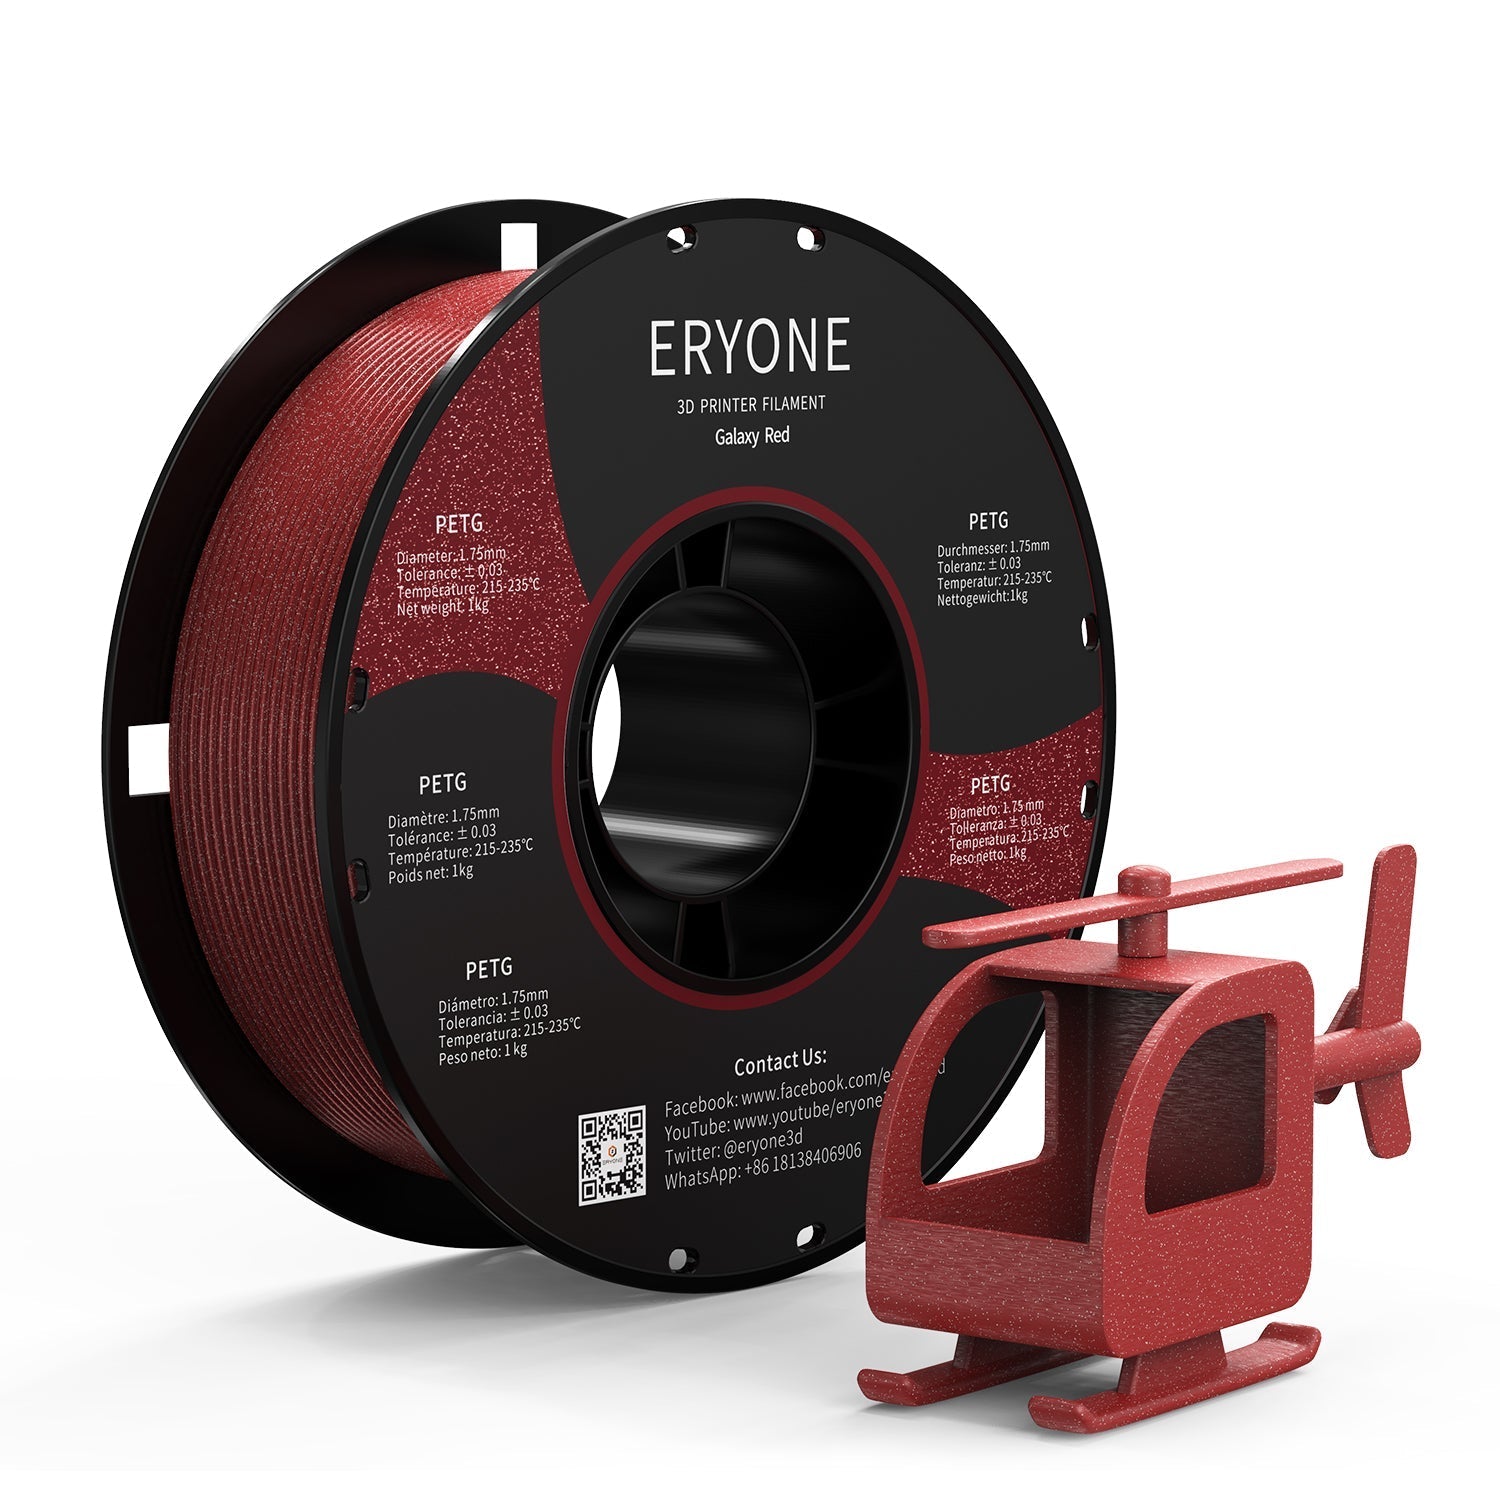 ERYONE Galaxy PETG Filamento para Impresora 3D 1.75mm, Precisión dimensional +/- 0.05 mm, 1kg (2.2LBS) / Carrete